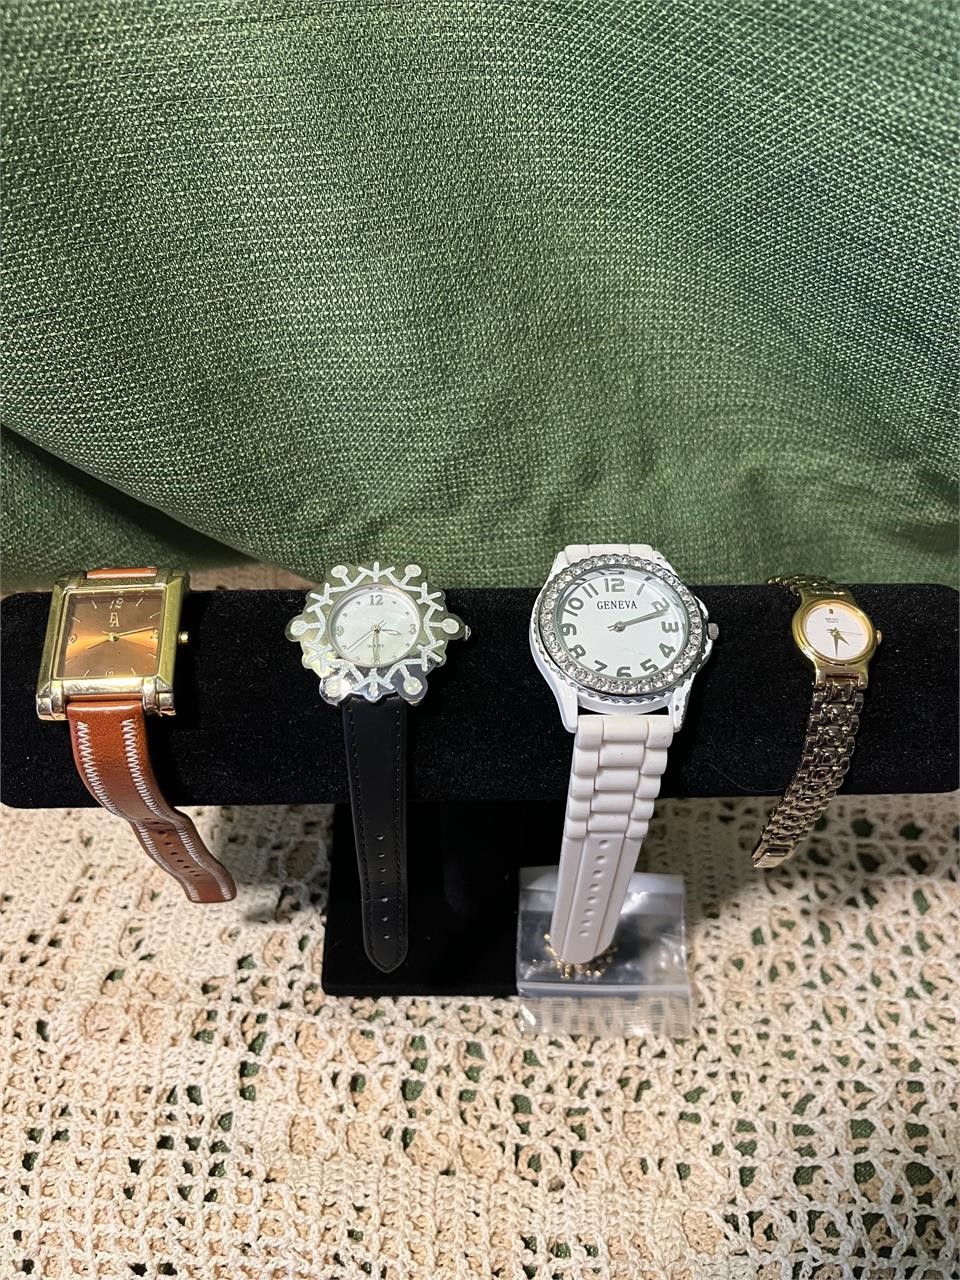 4 Watches Geneva Seiko Quartz and 1 more